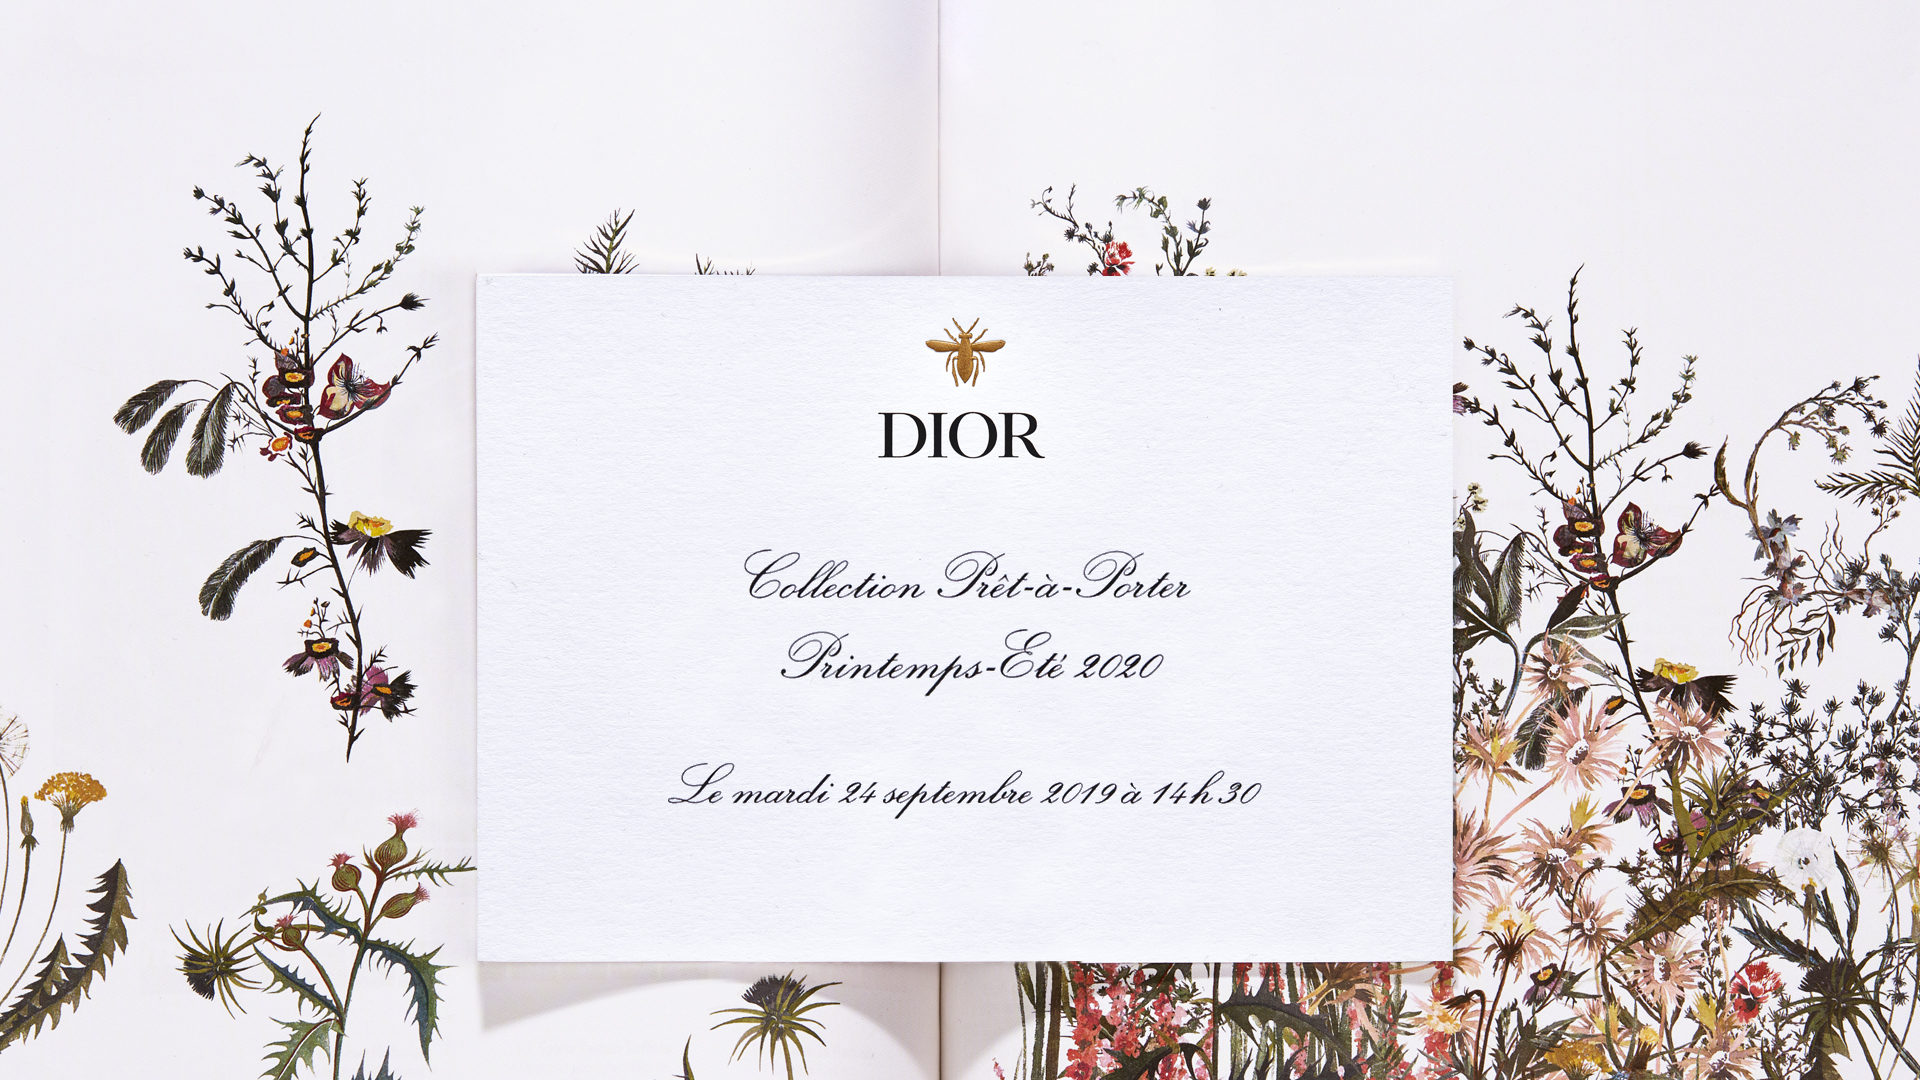 Watch: Dior’s Spring/Summer 2020 Runway Show live from Paris Fashion Week